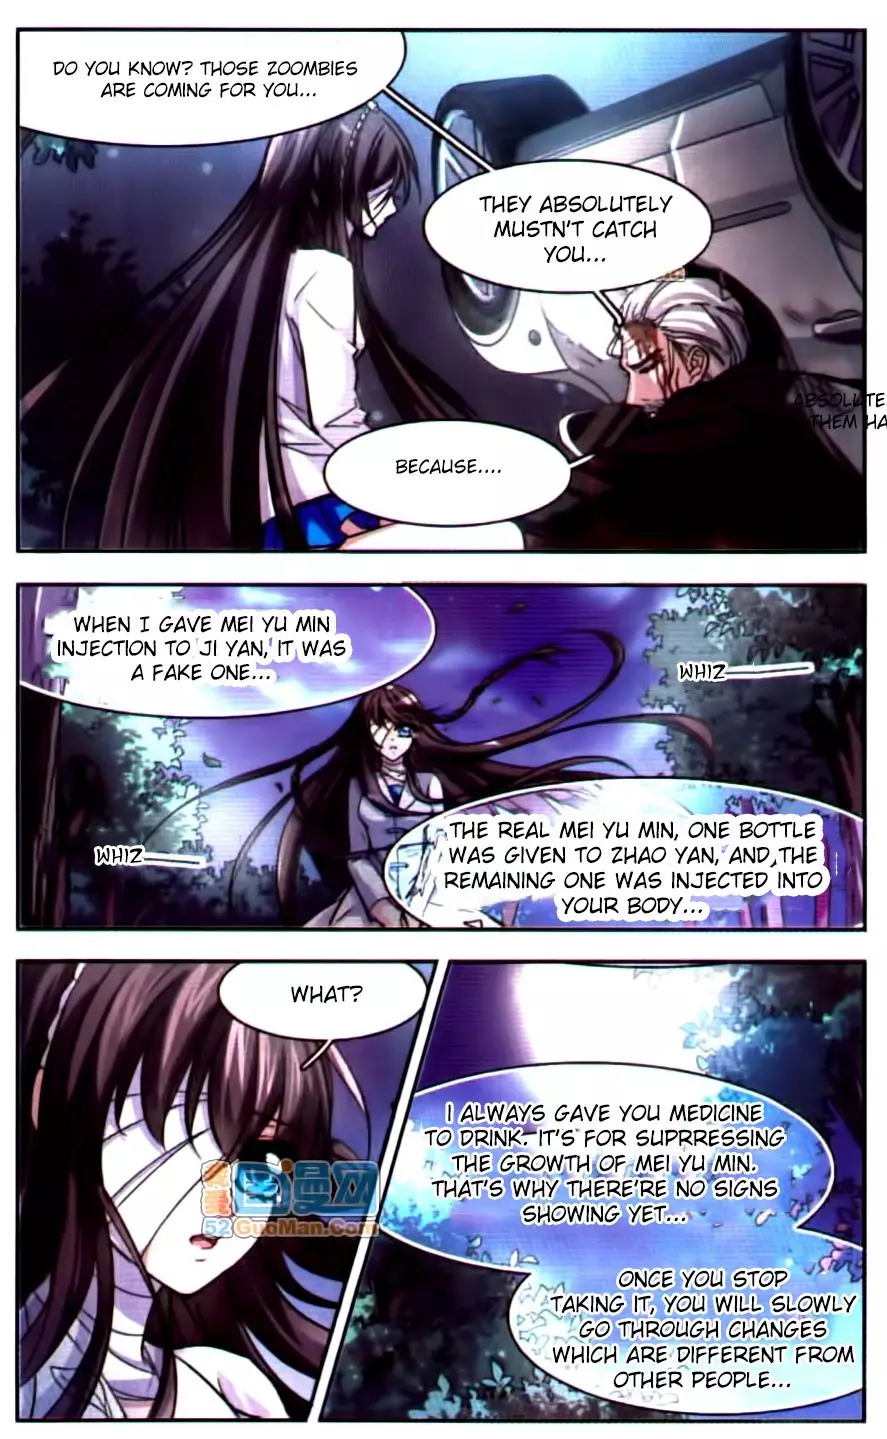 Vampire Sphere - 9 page p_00018